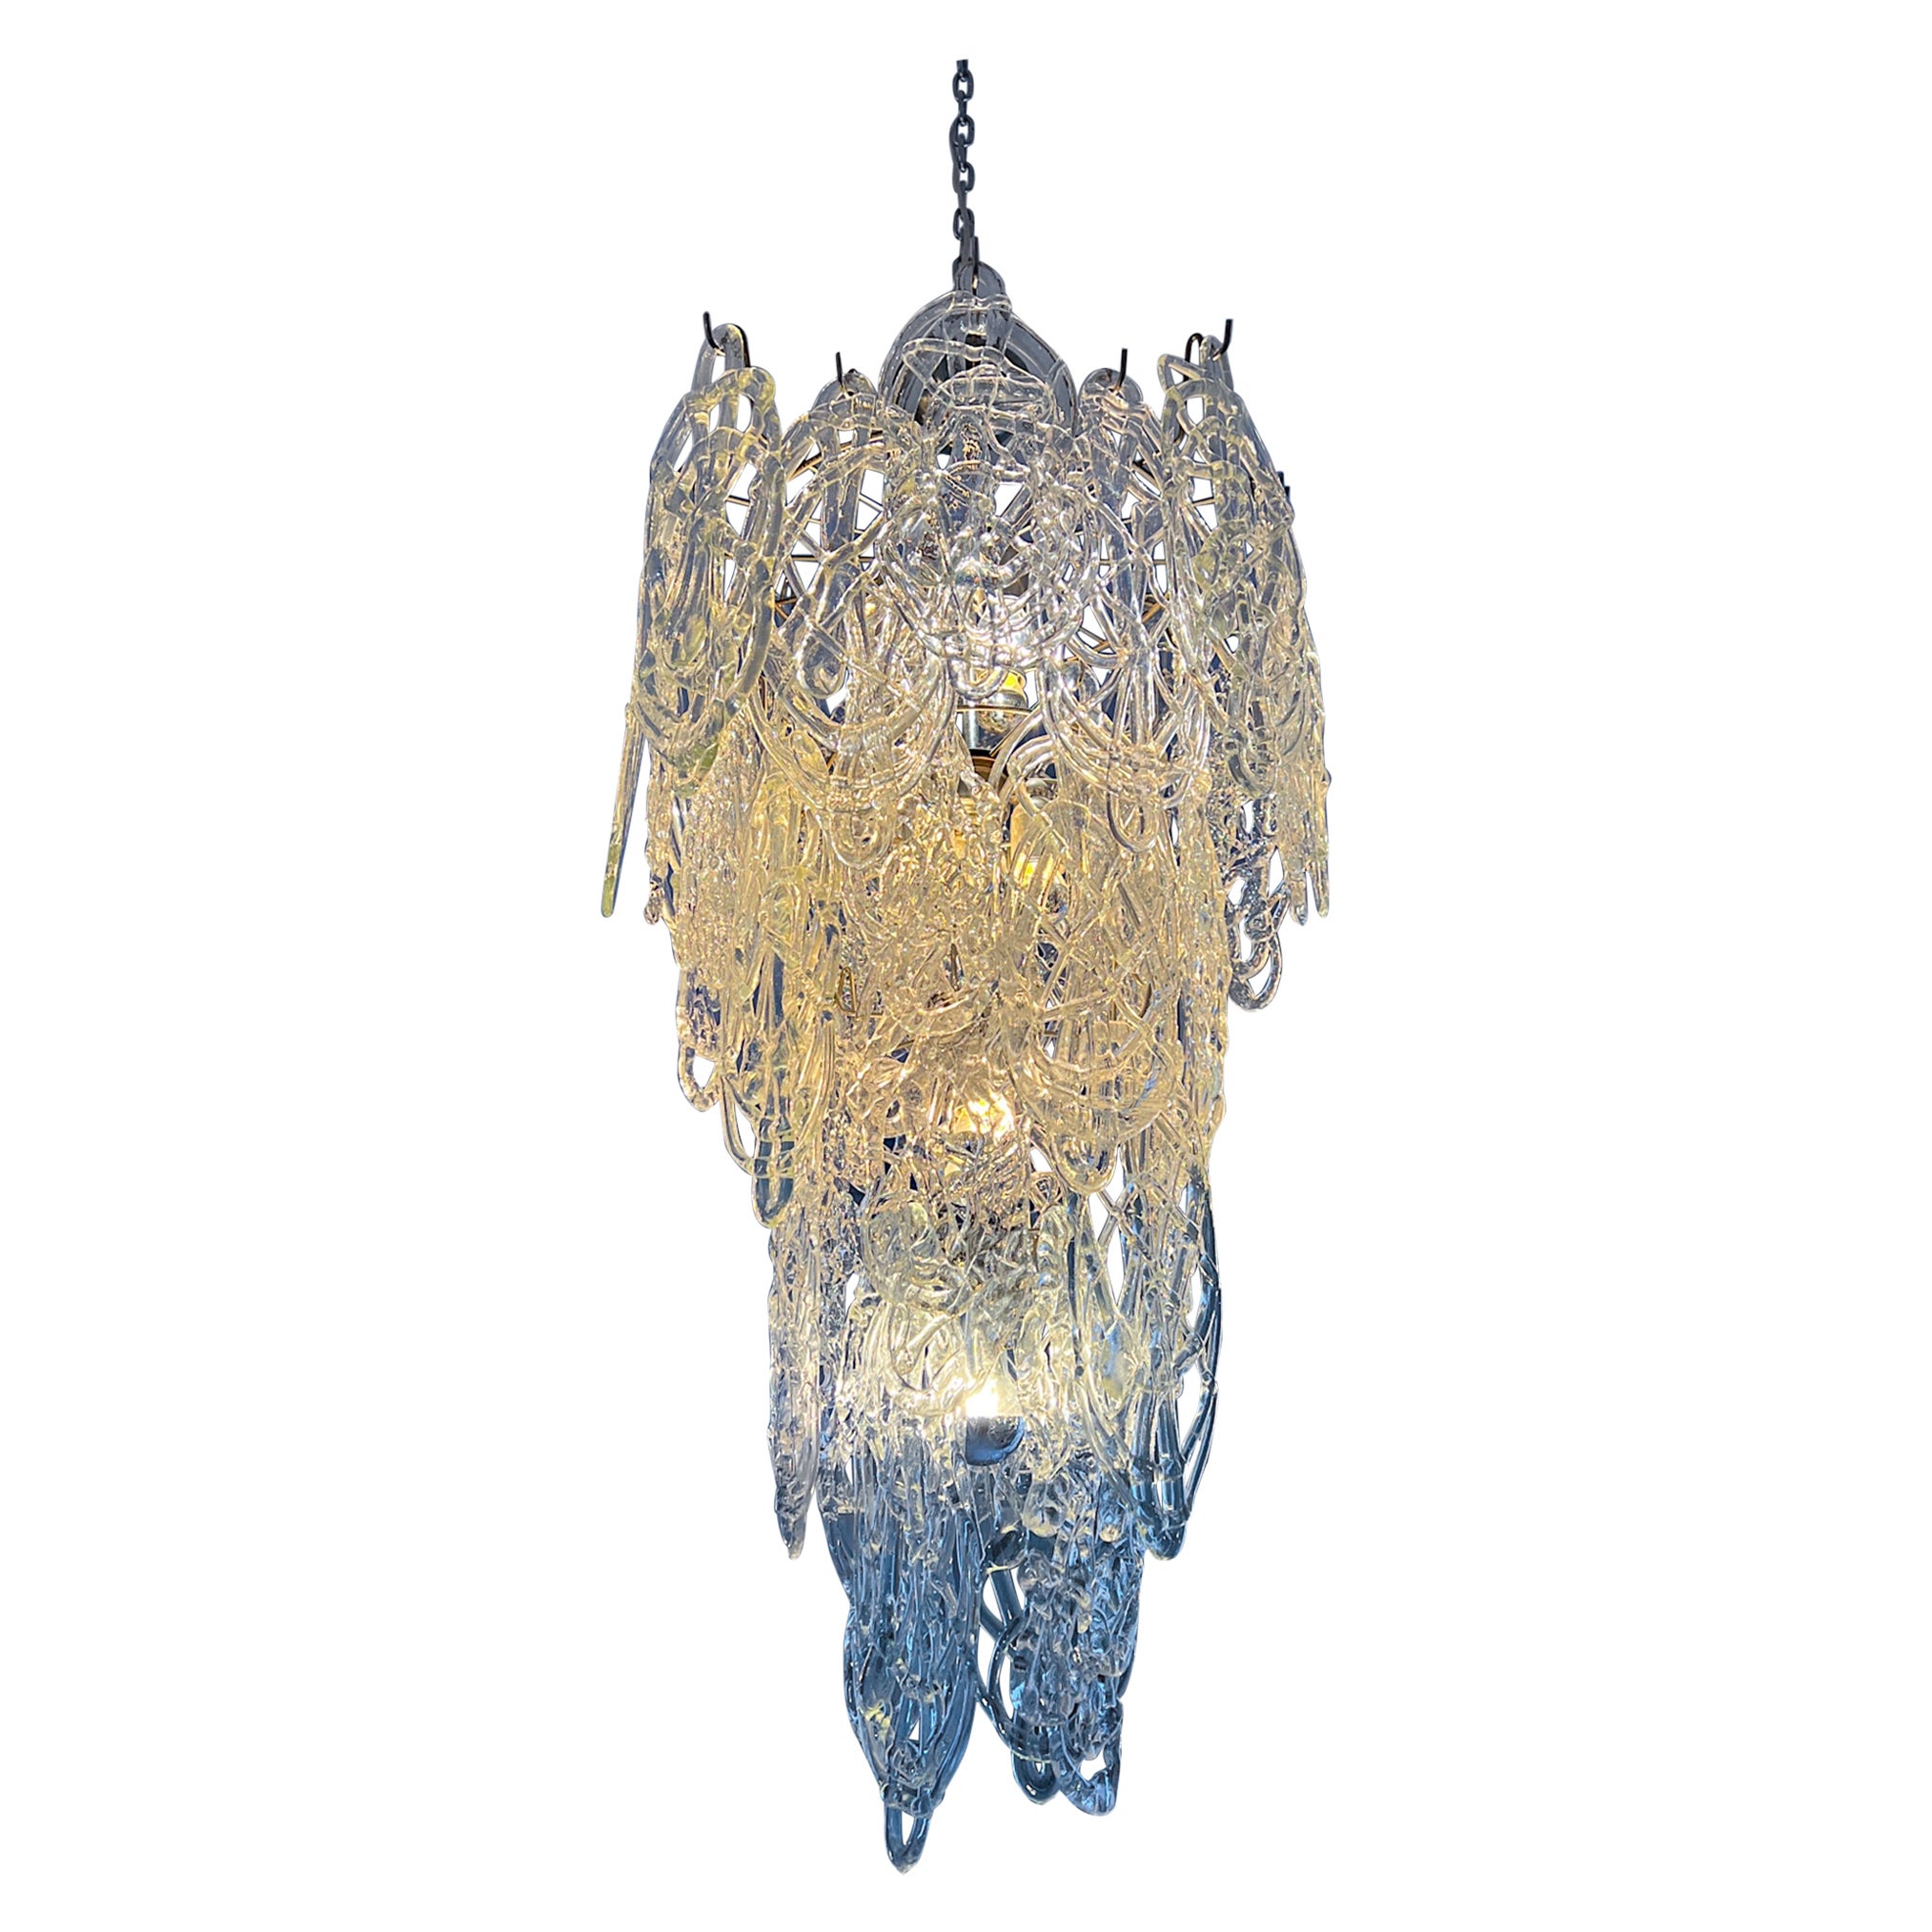 1960s Large Murano glass chandelier in model "Ragnatela" by mazzega